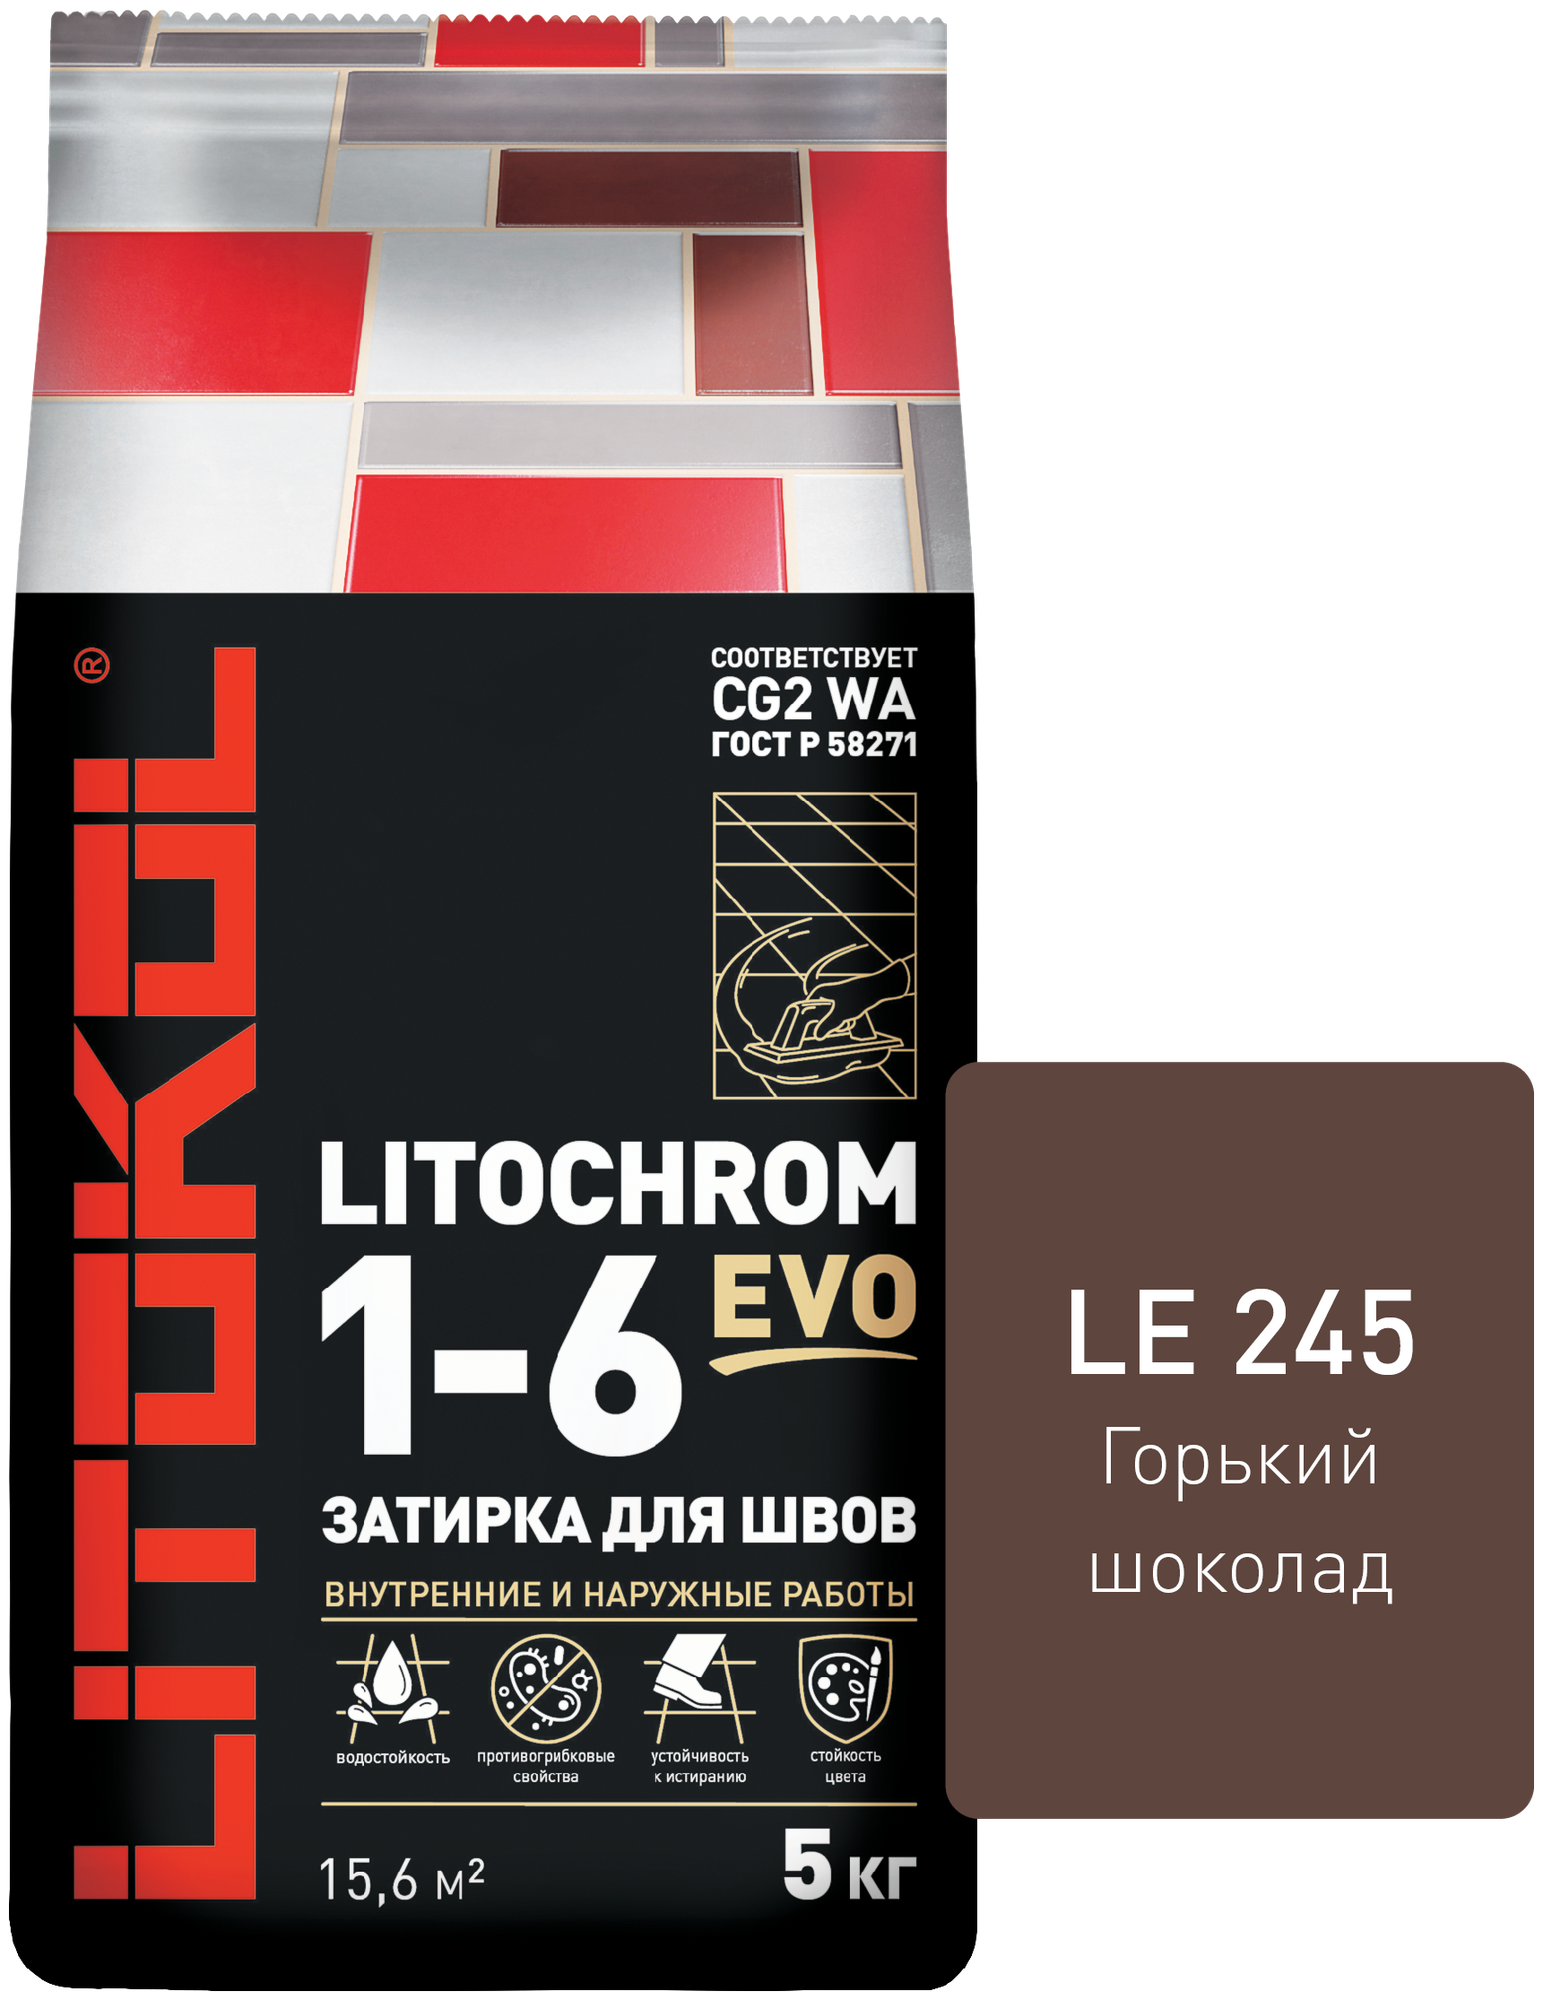 Цементная затирка Литокол LITOKOL LITOCHROM 1-6 EVO LE.245 Горький шоколад, 5 кг - фотография № 3